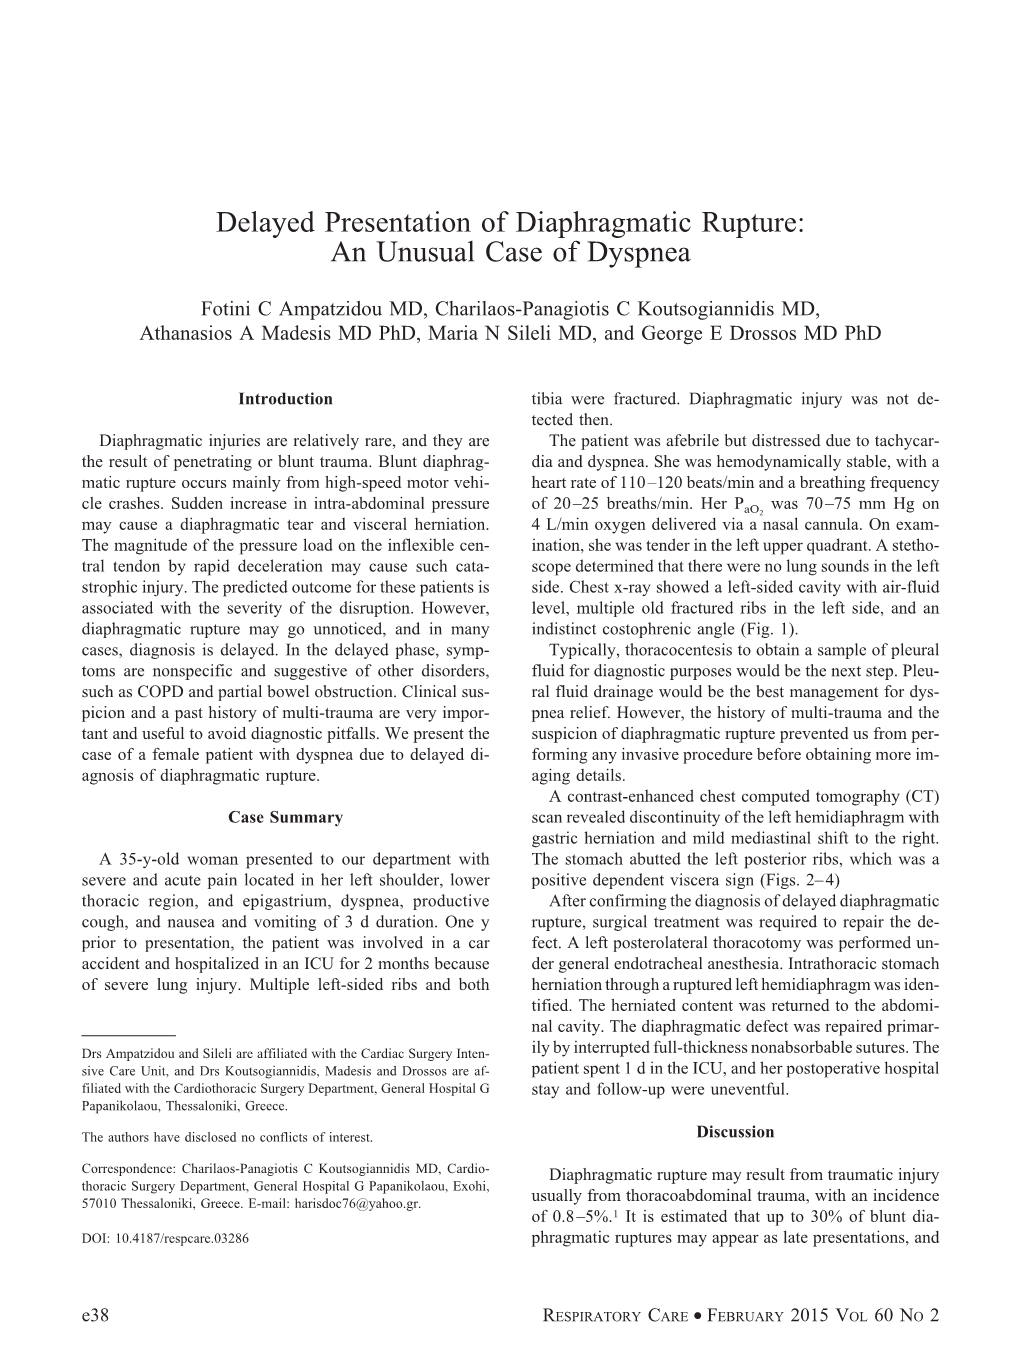 Delayed Presentation of Diaphragmatic Rupture: an Unusual Case of Dyspnea